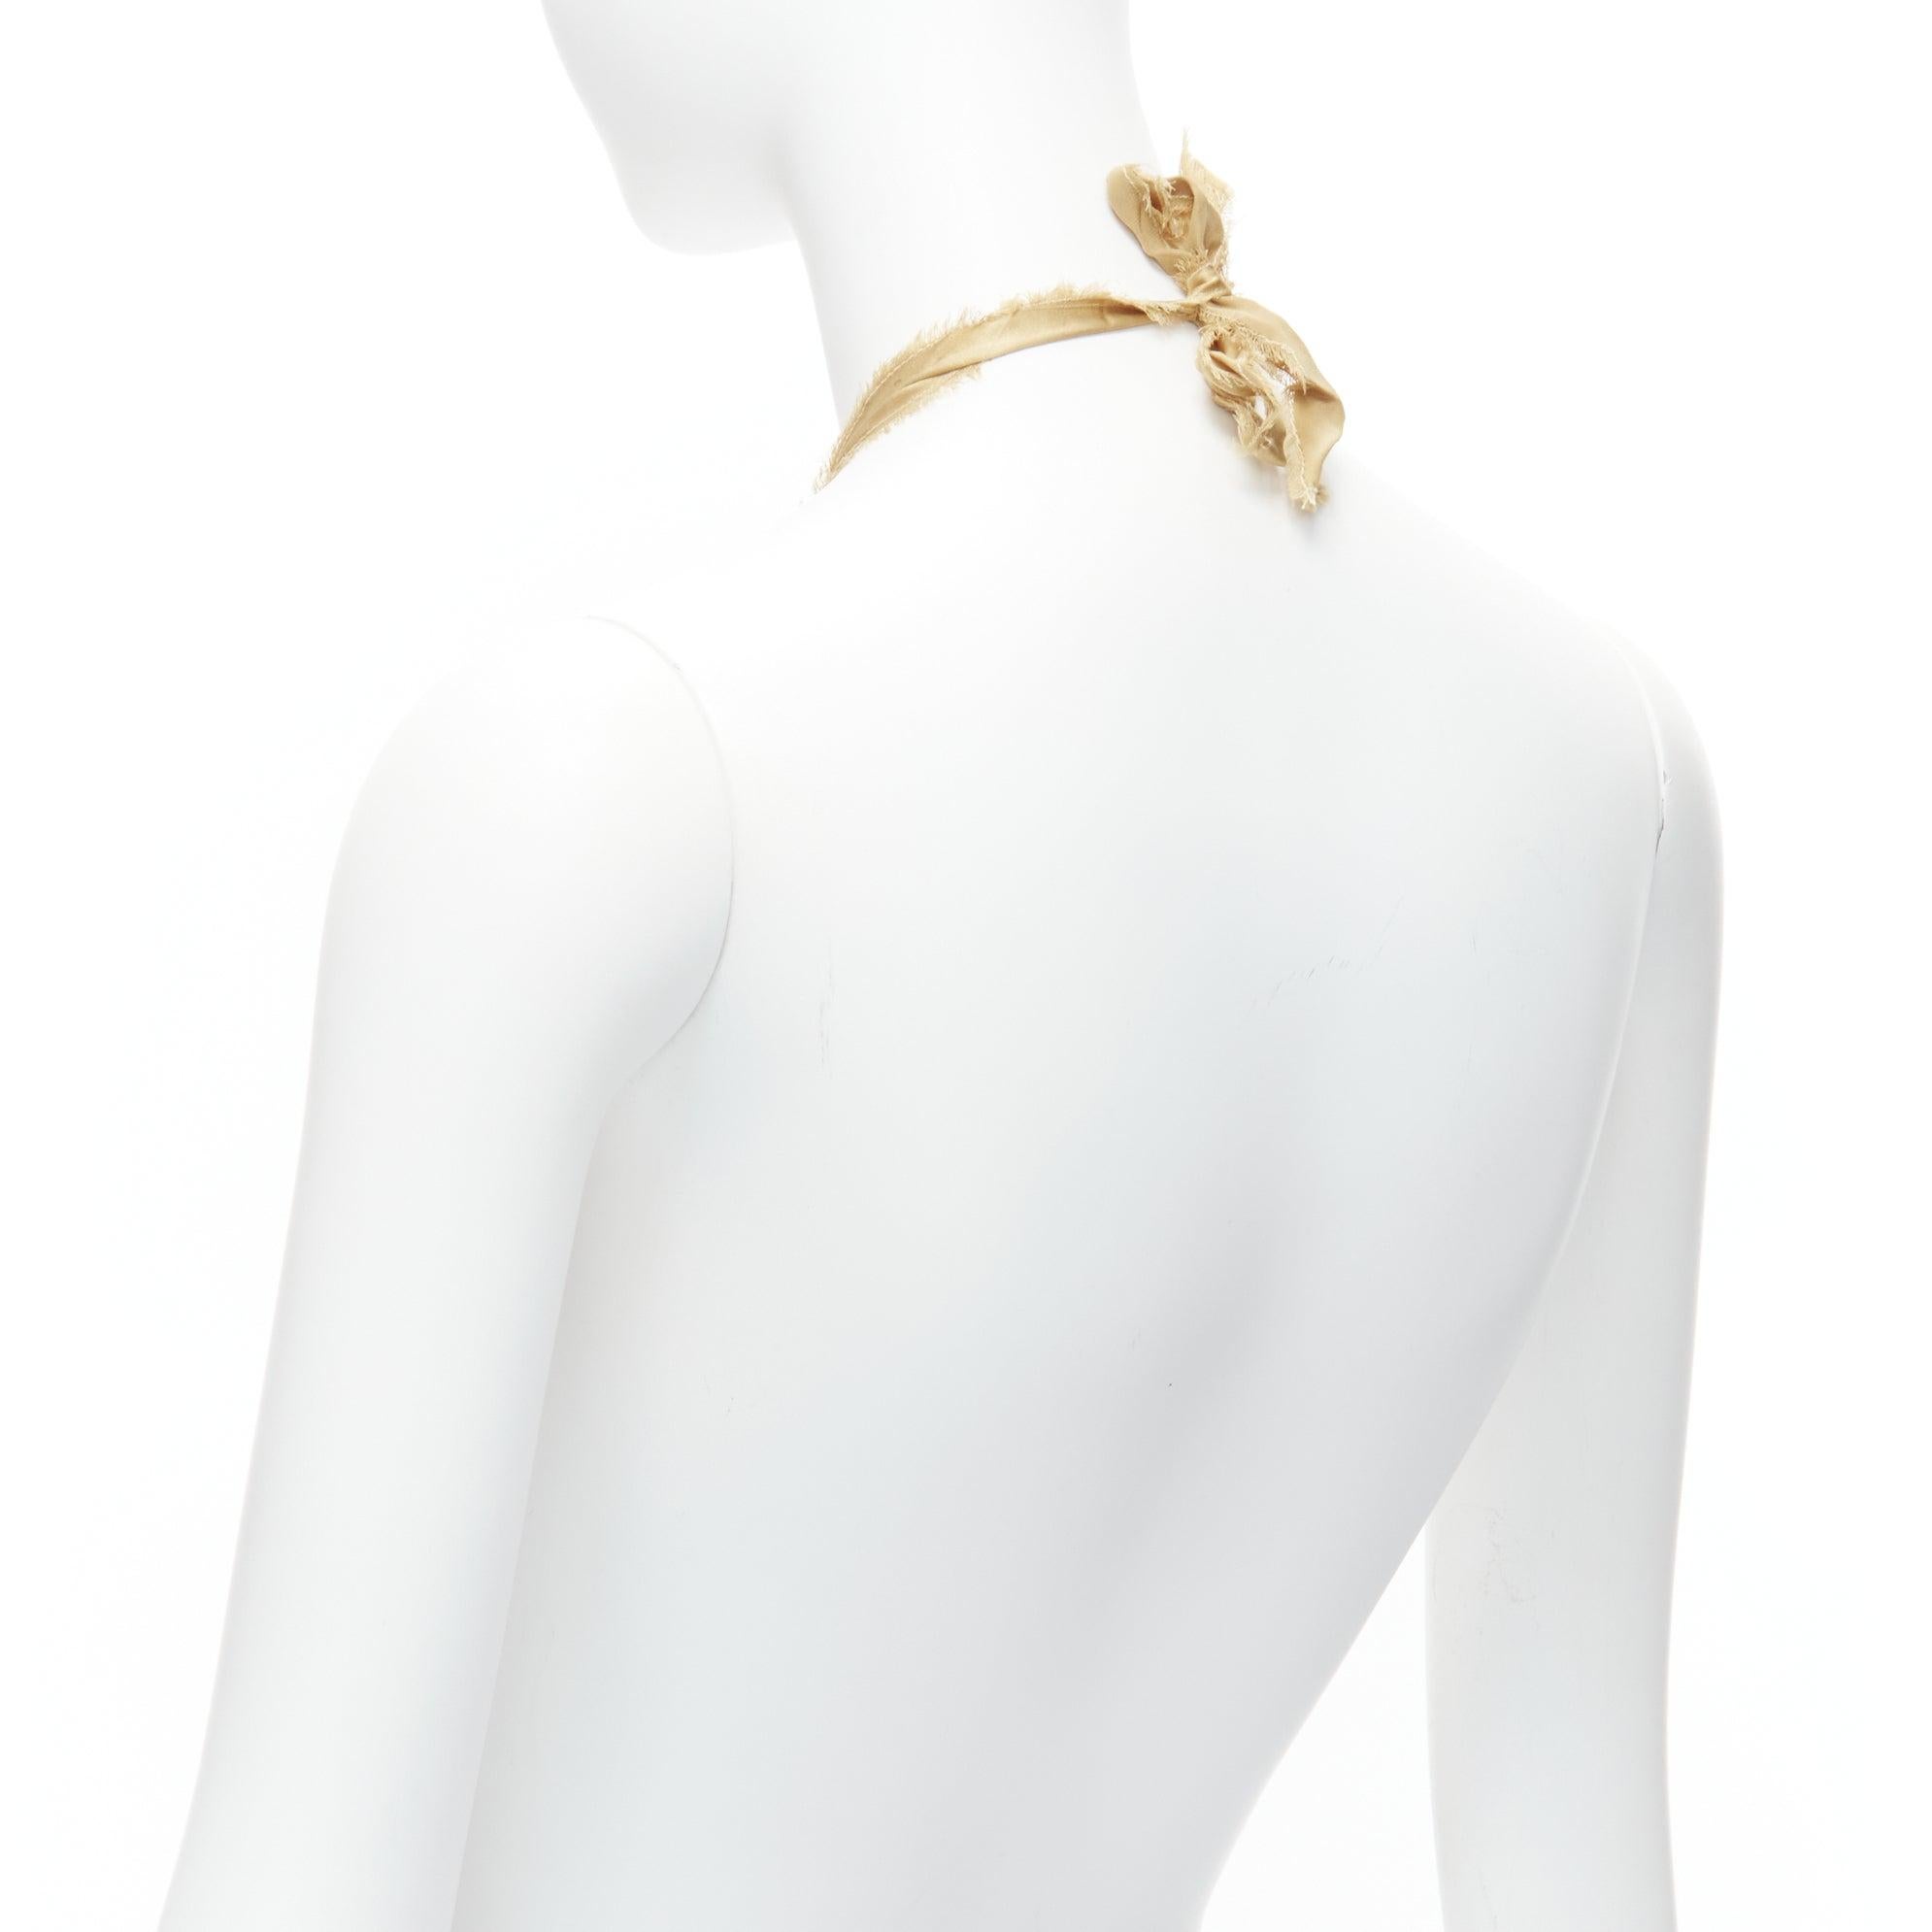 LANVIN ALBER ELBAZ gold silk ribbon cream pearl wrap long necklace For Sale 2